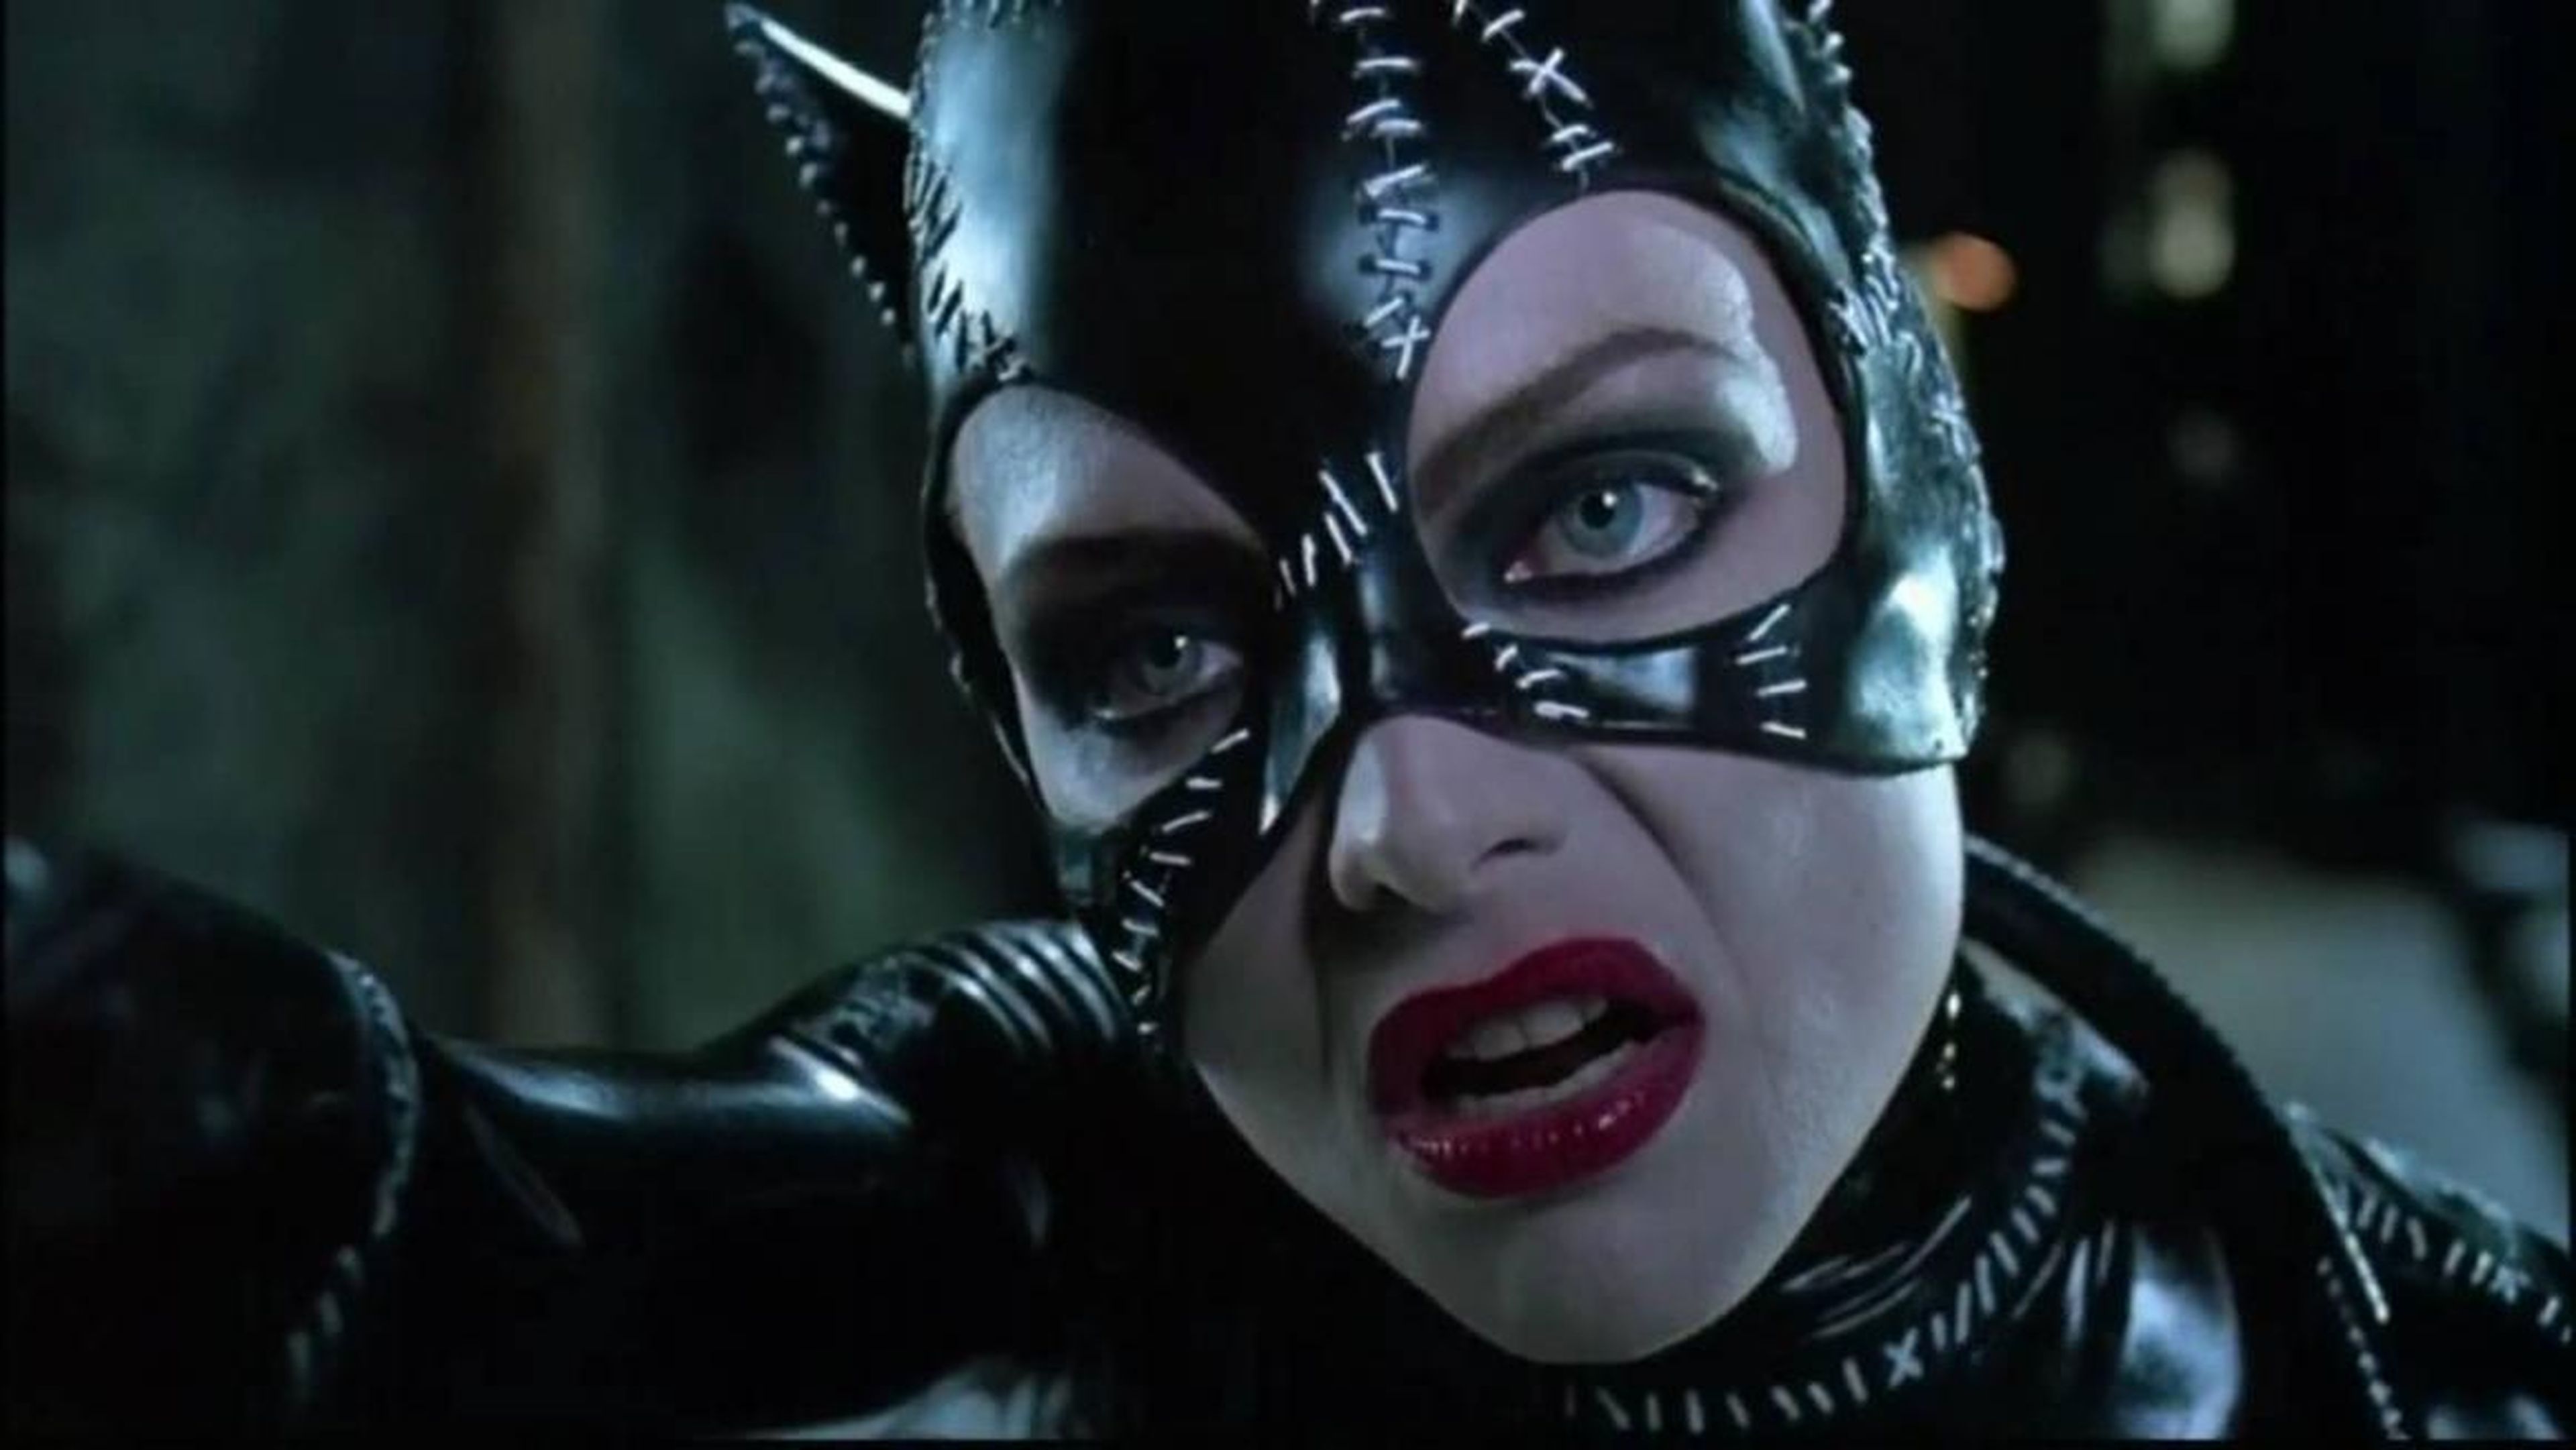 3. Michelle Pfeiffer as Selina Kyle/Catwoman in "Batman Returns" (1992)